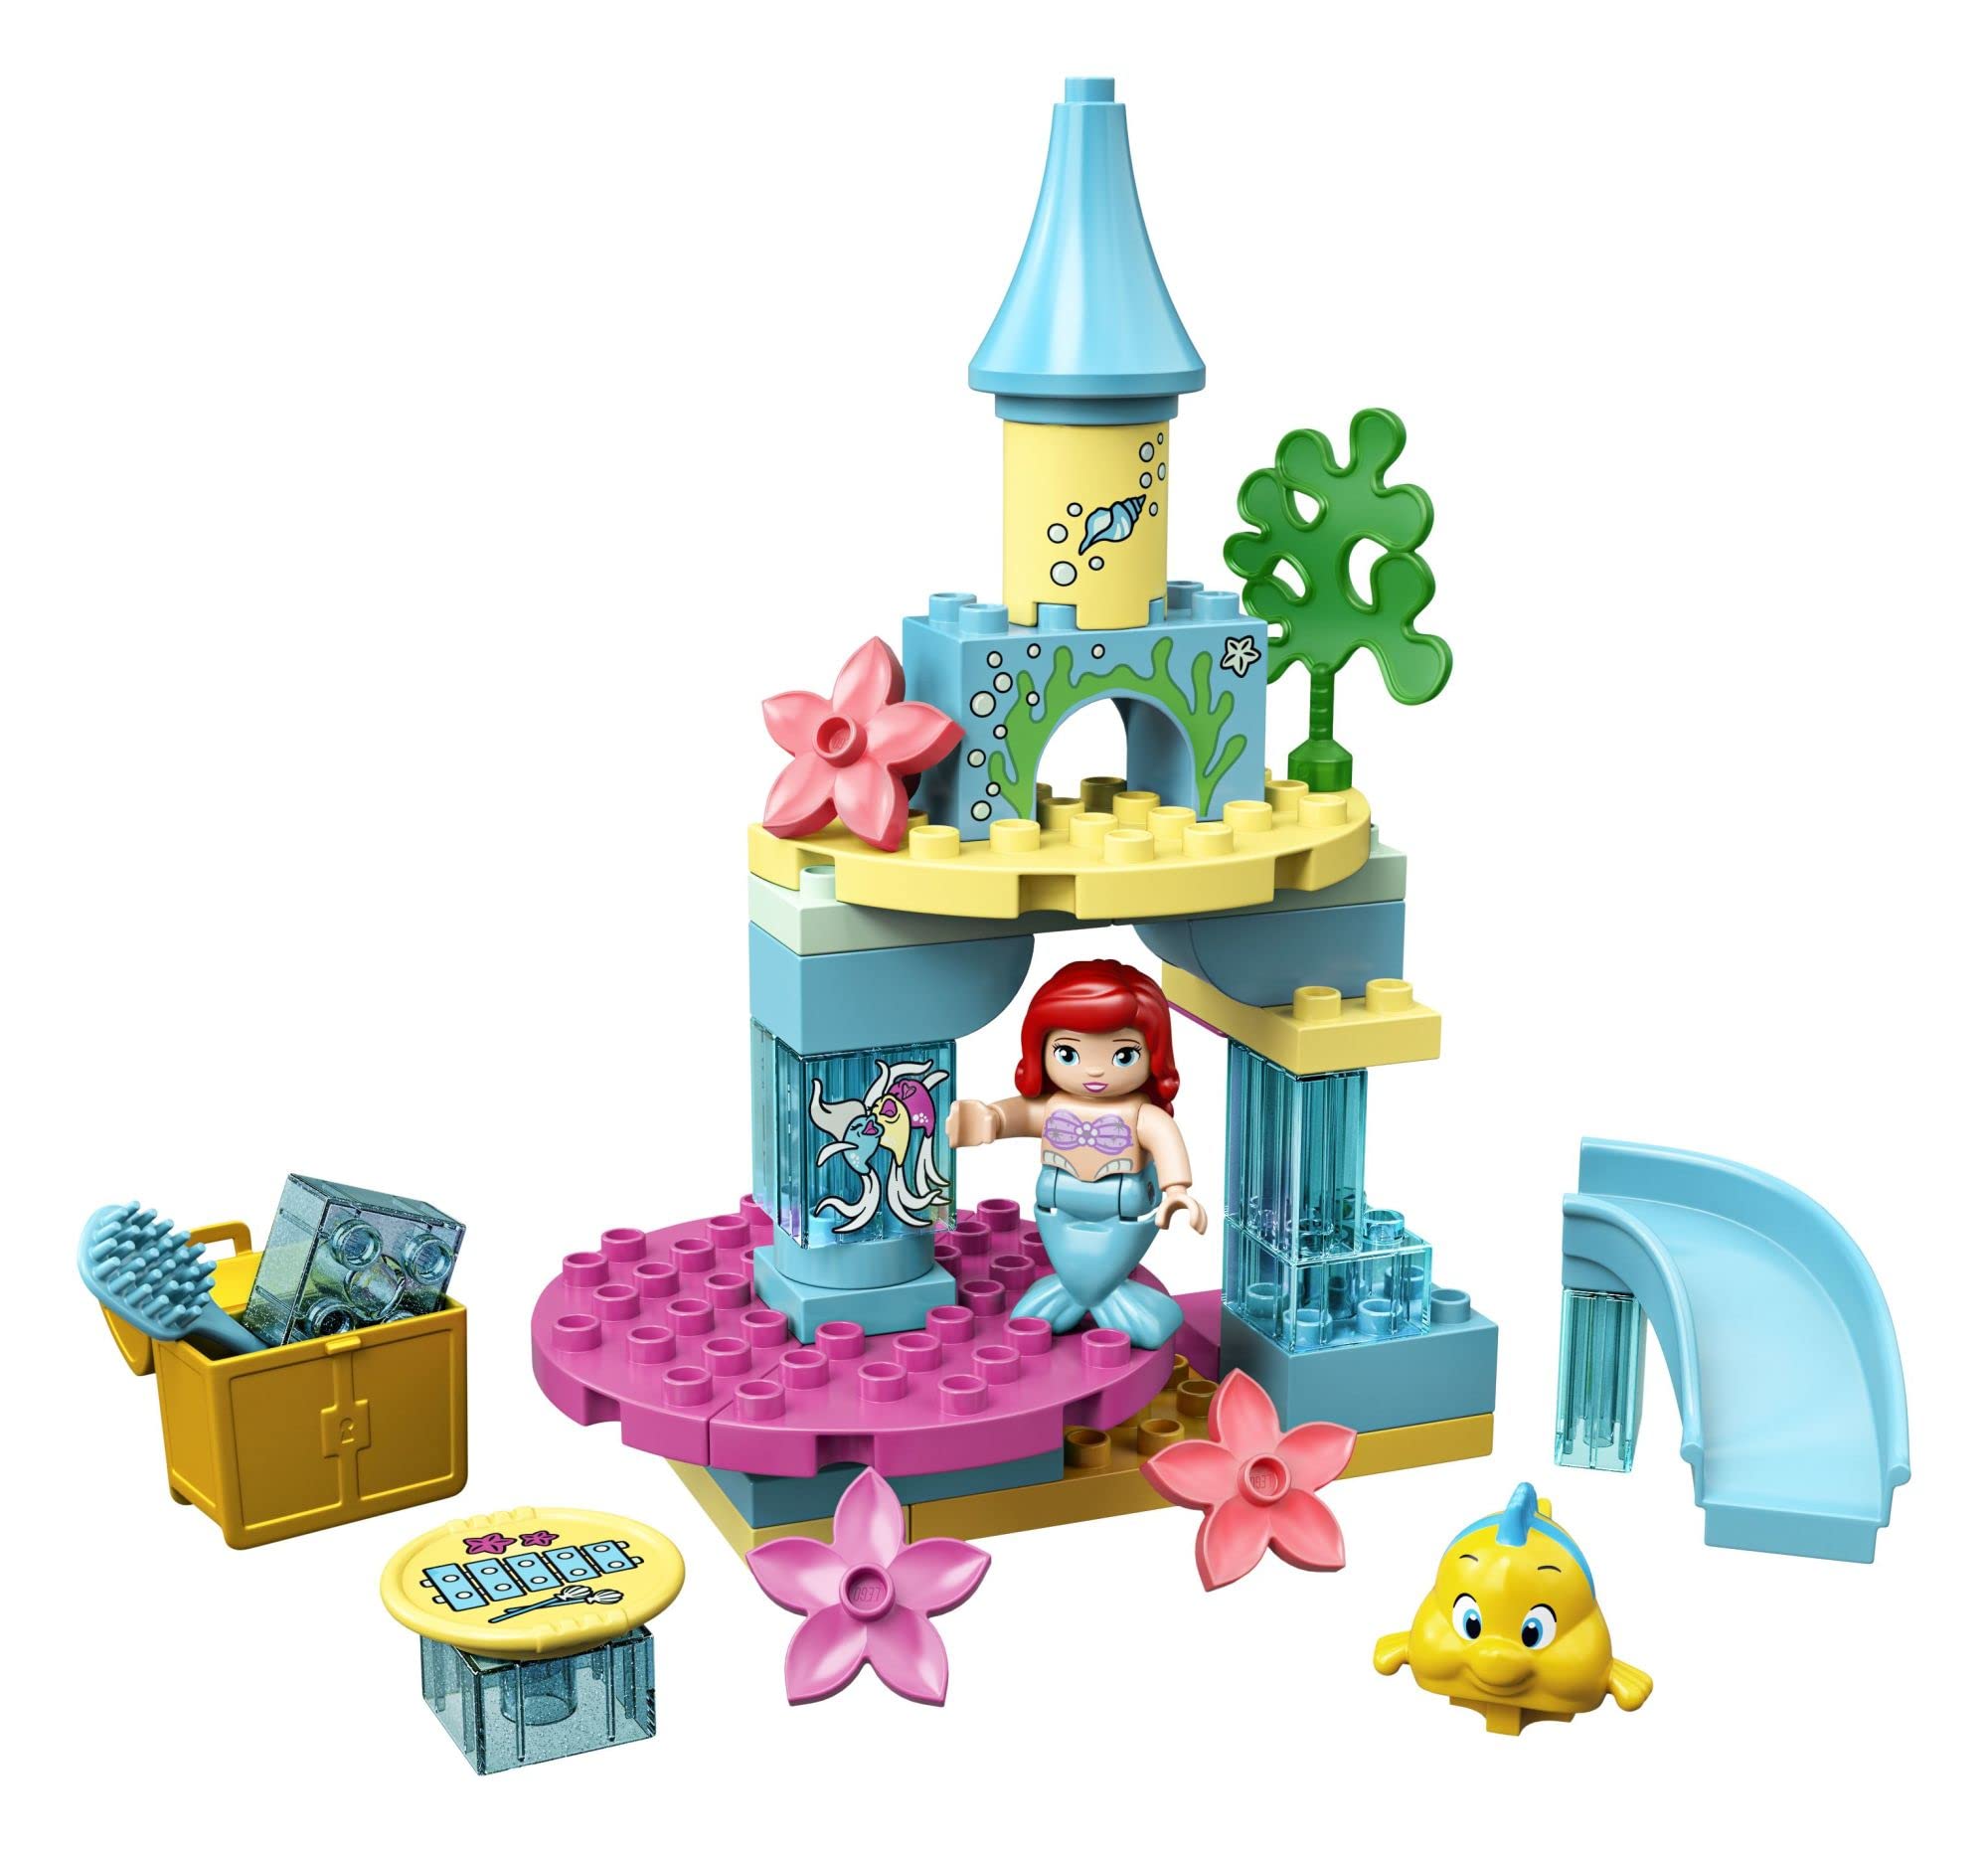 LEGO DUPLO Disney Ariel's Undersea Castle 10922 Imaginative Building Toy for Kids; Ariel and Flounder’s Princess Castle Playset Under The Sea (35 Pieces)